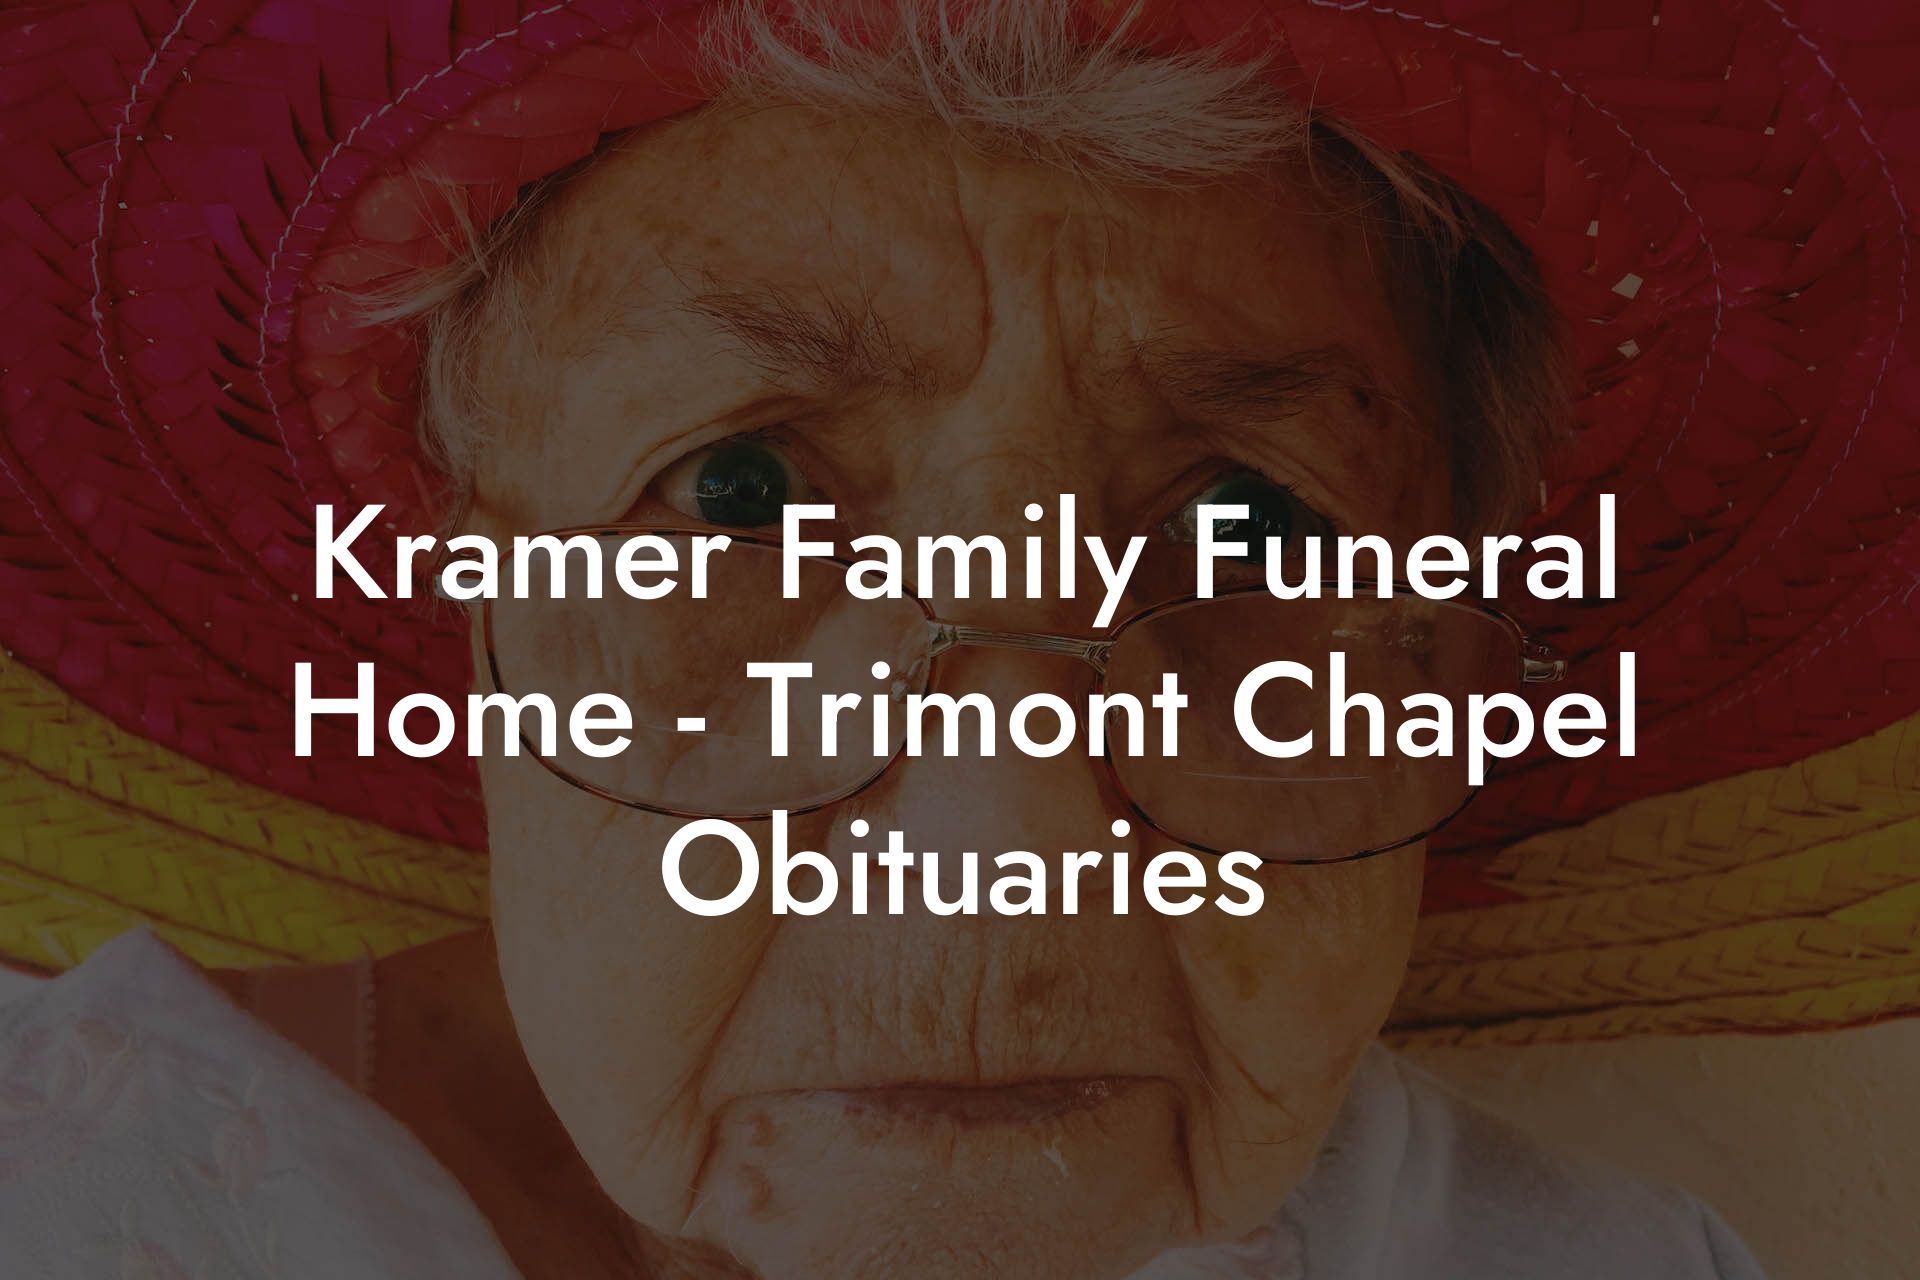 Kramer Family Funeral Home - Trimont Chapel Obituaries